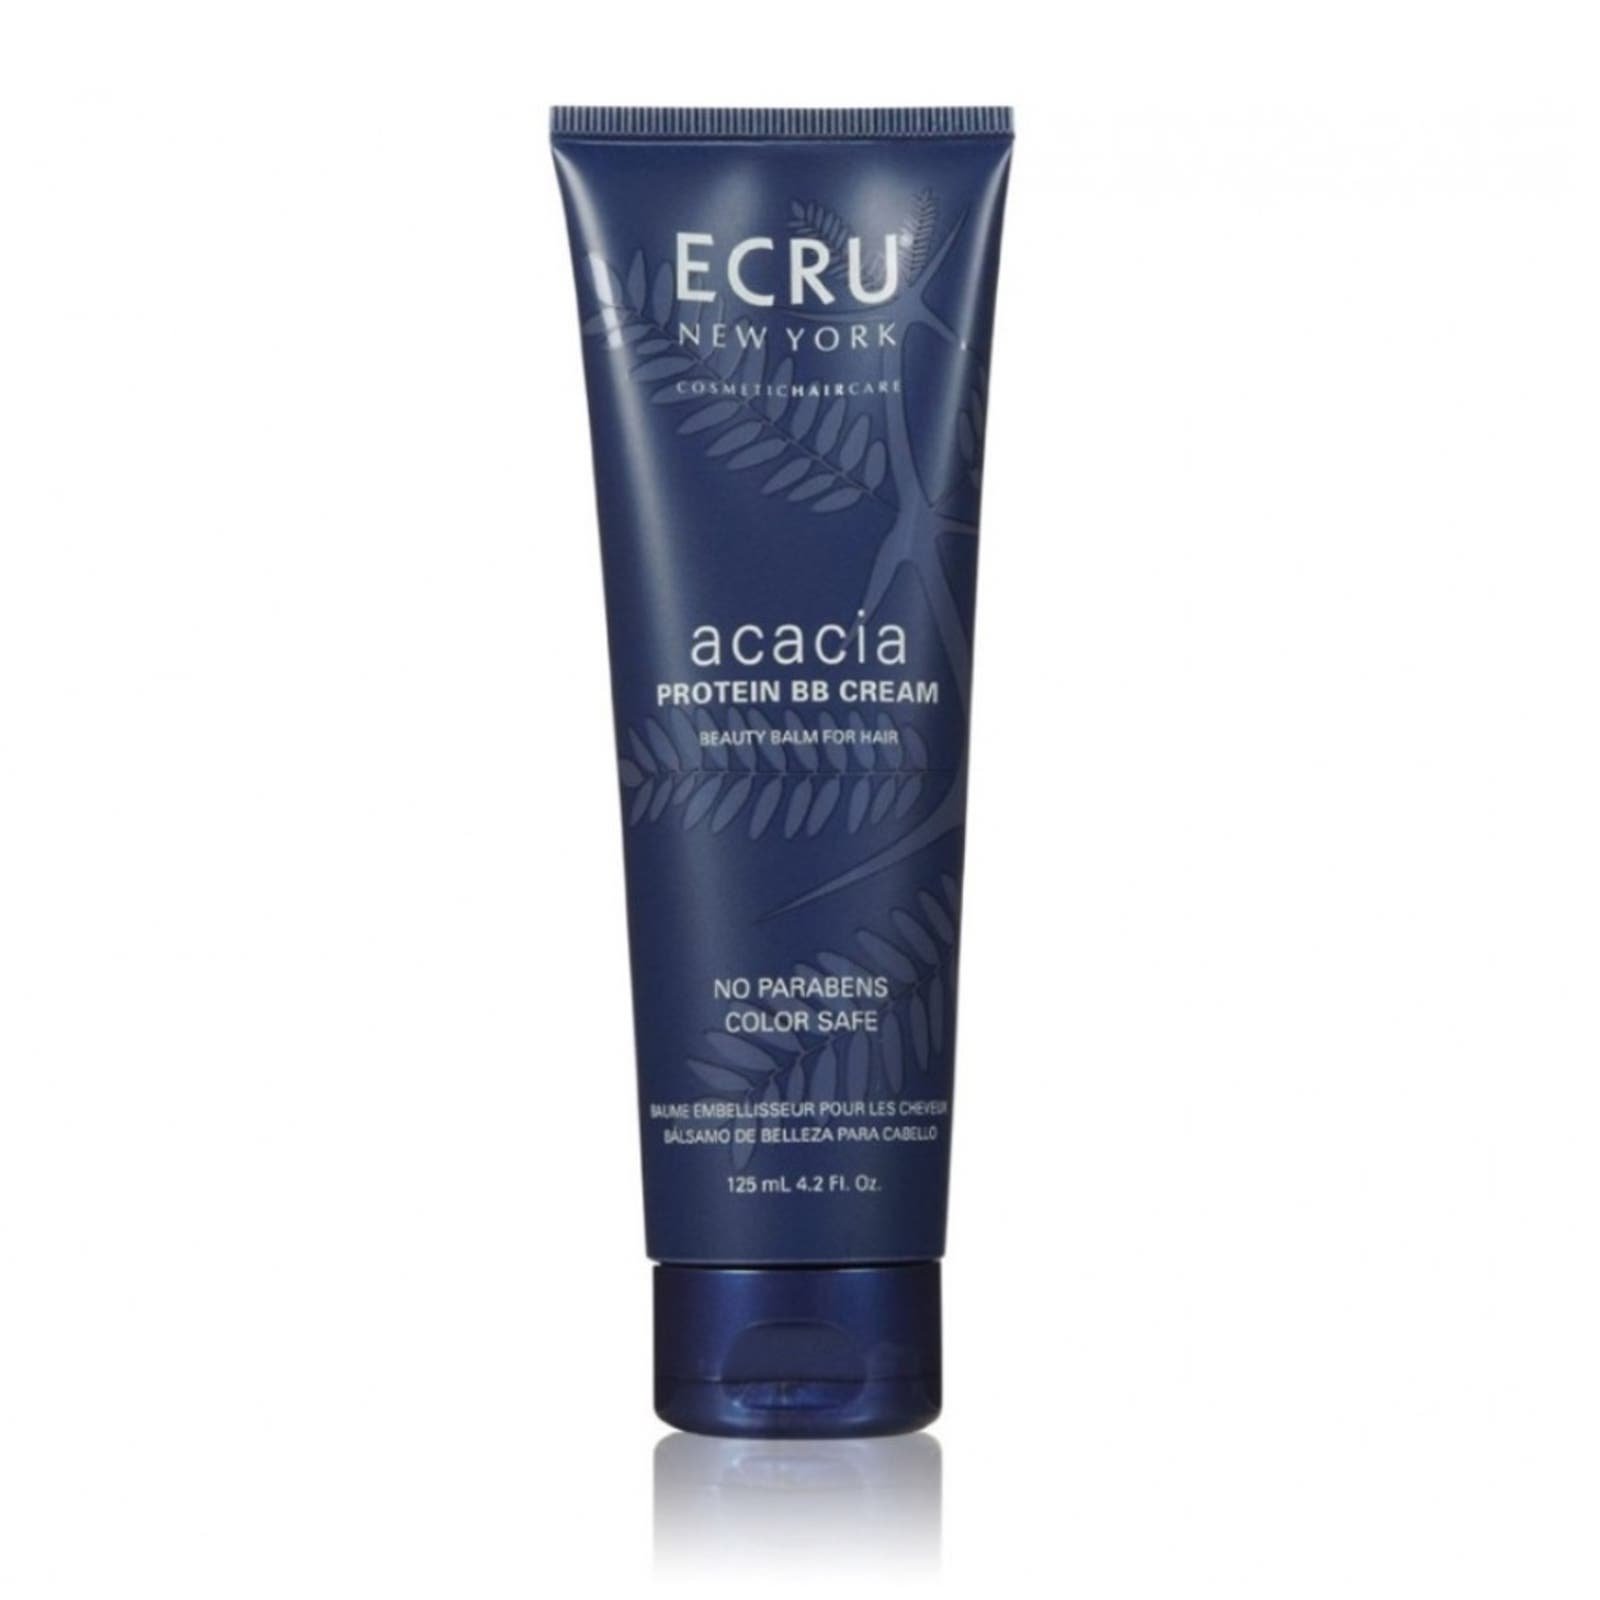 ECRU New York Acacia Protein BB Cream Hair Care Collage